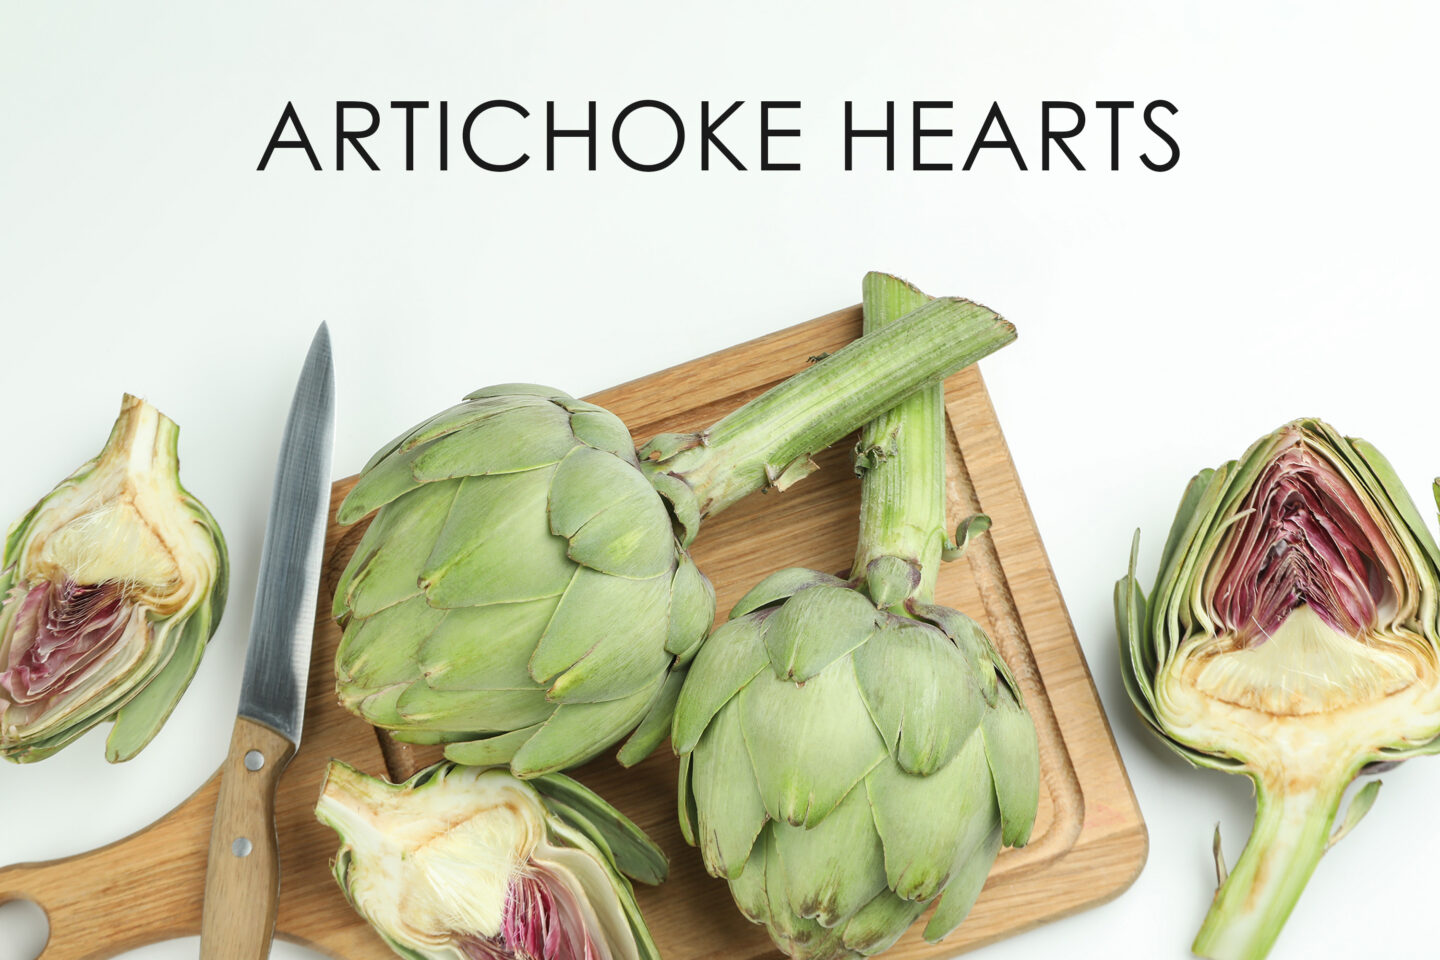 artichoke hearts whole and sliced